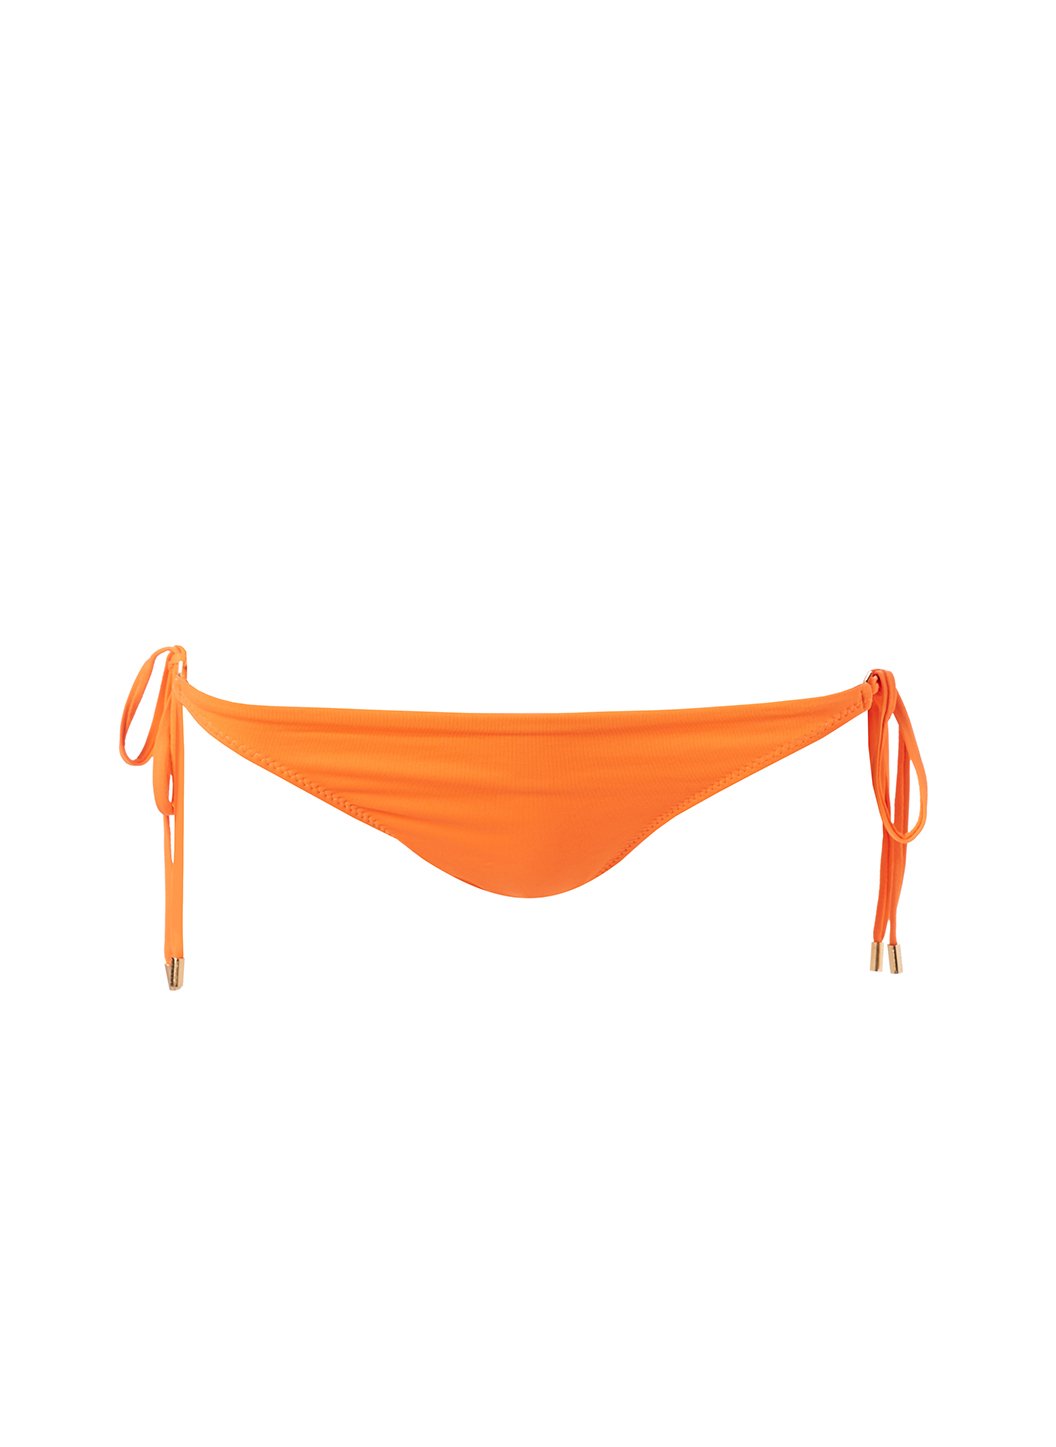 cancun-orange-classic-triangle-bikini-bottom